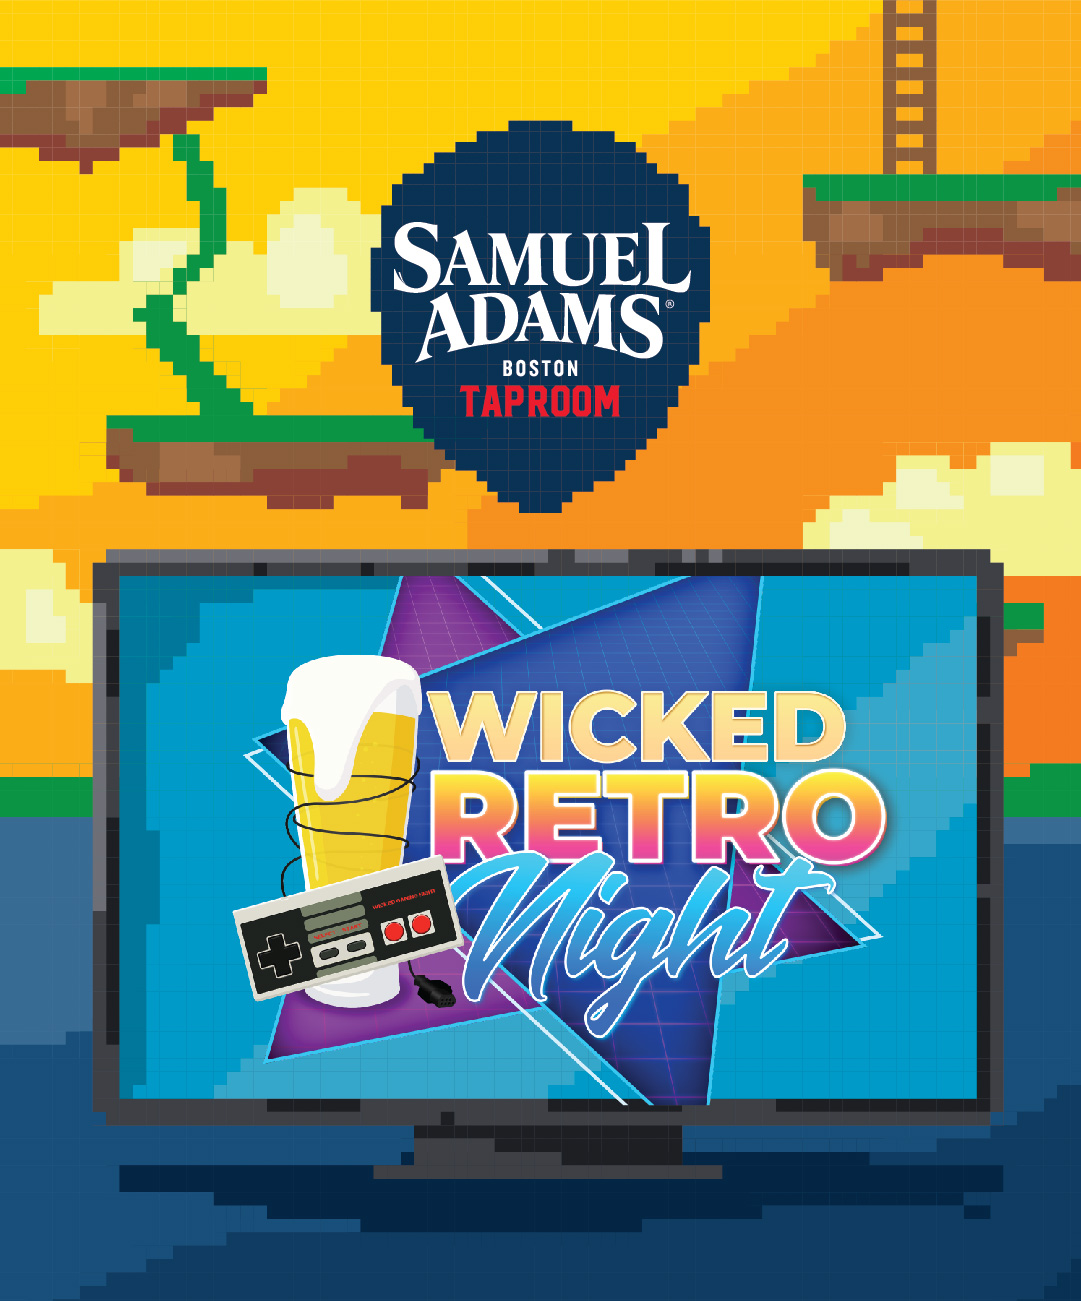 Samuel Adams Boston Tap Room - Wicked Retro